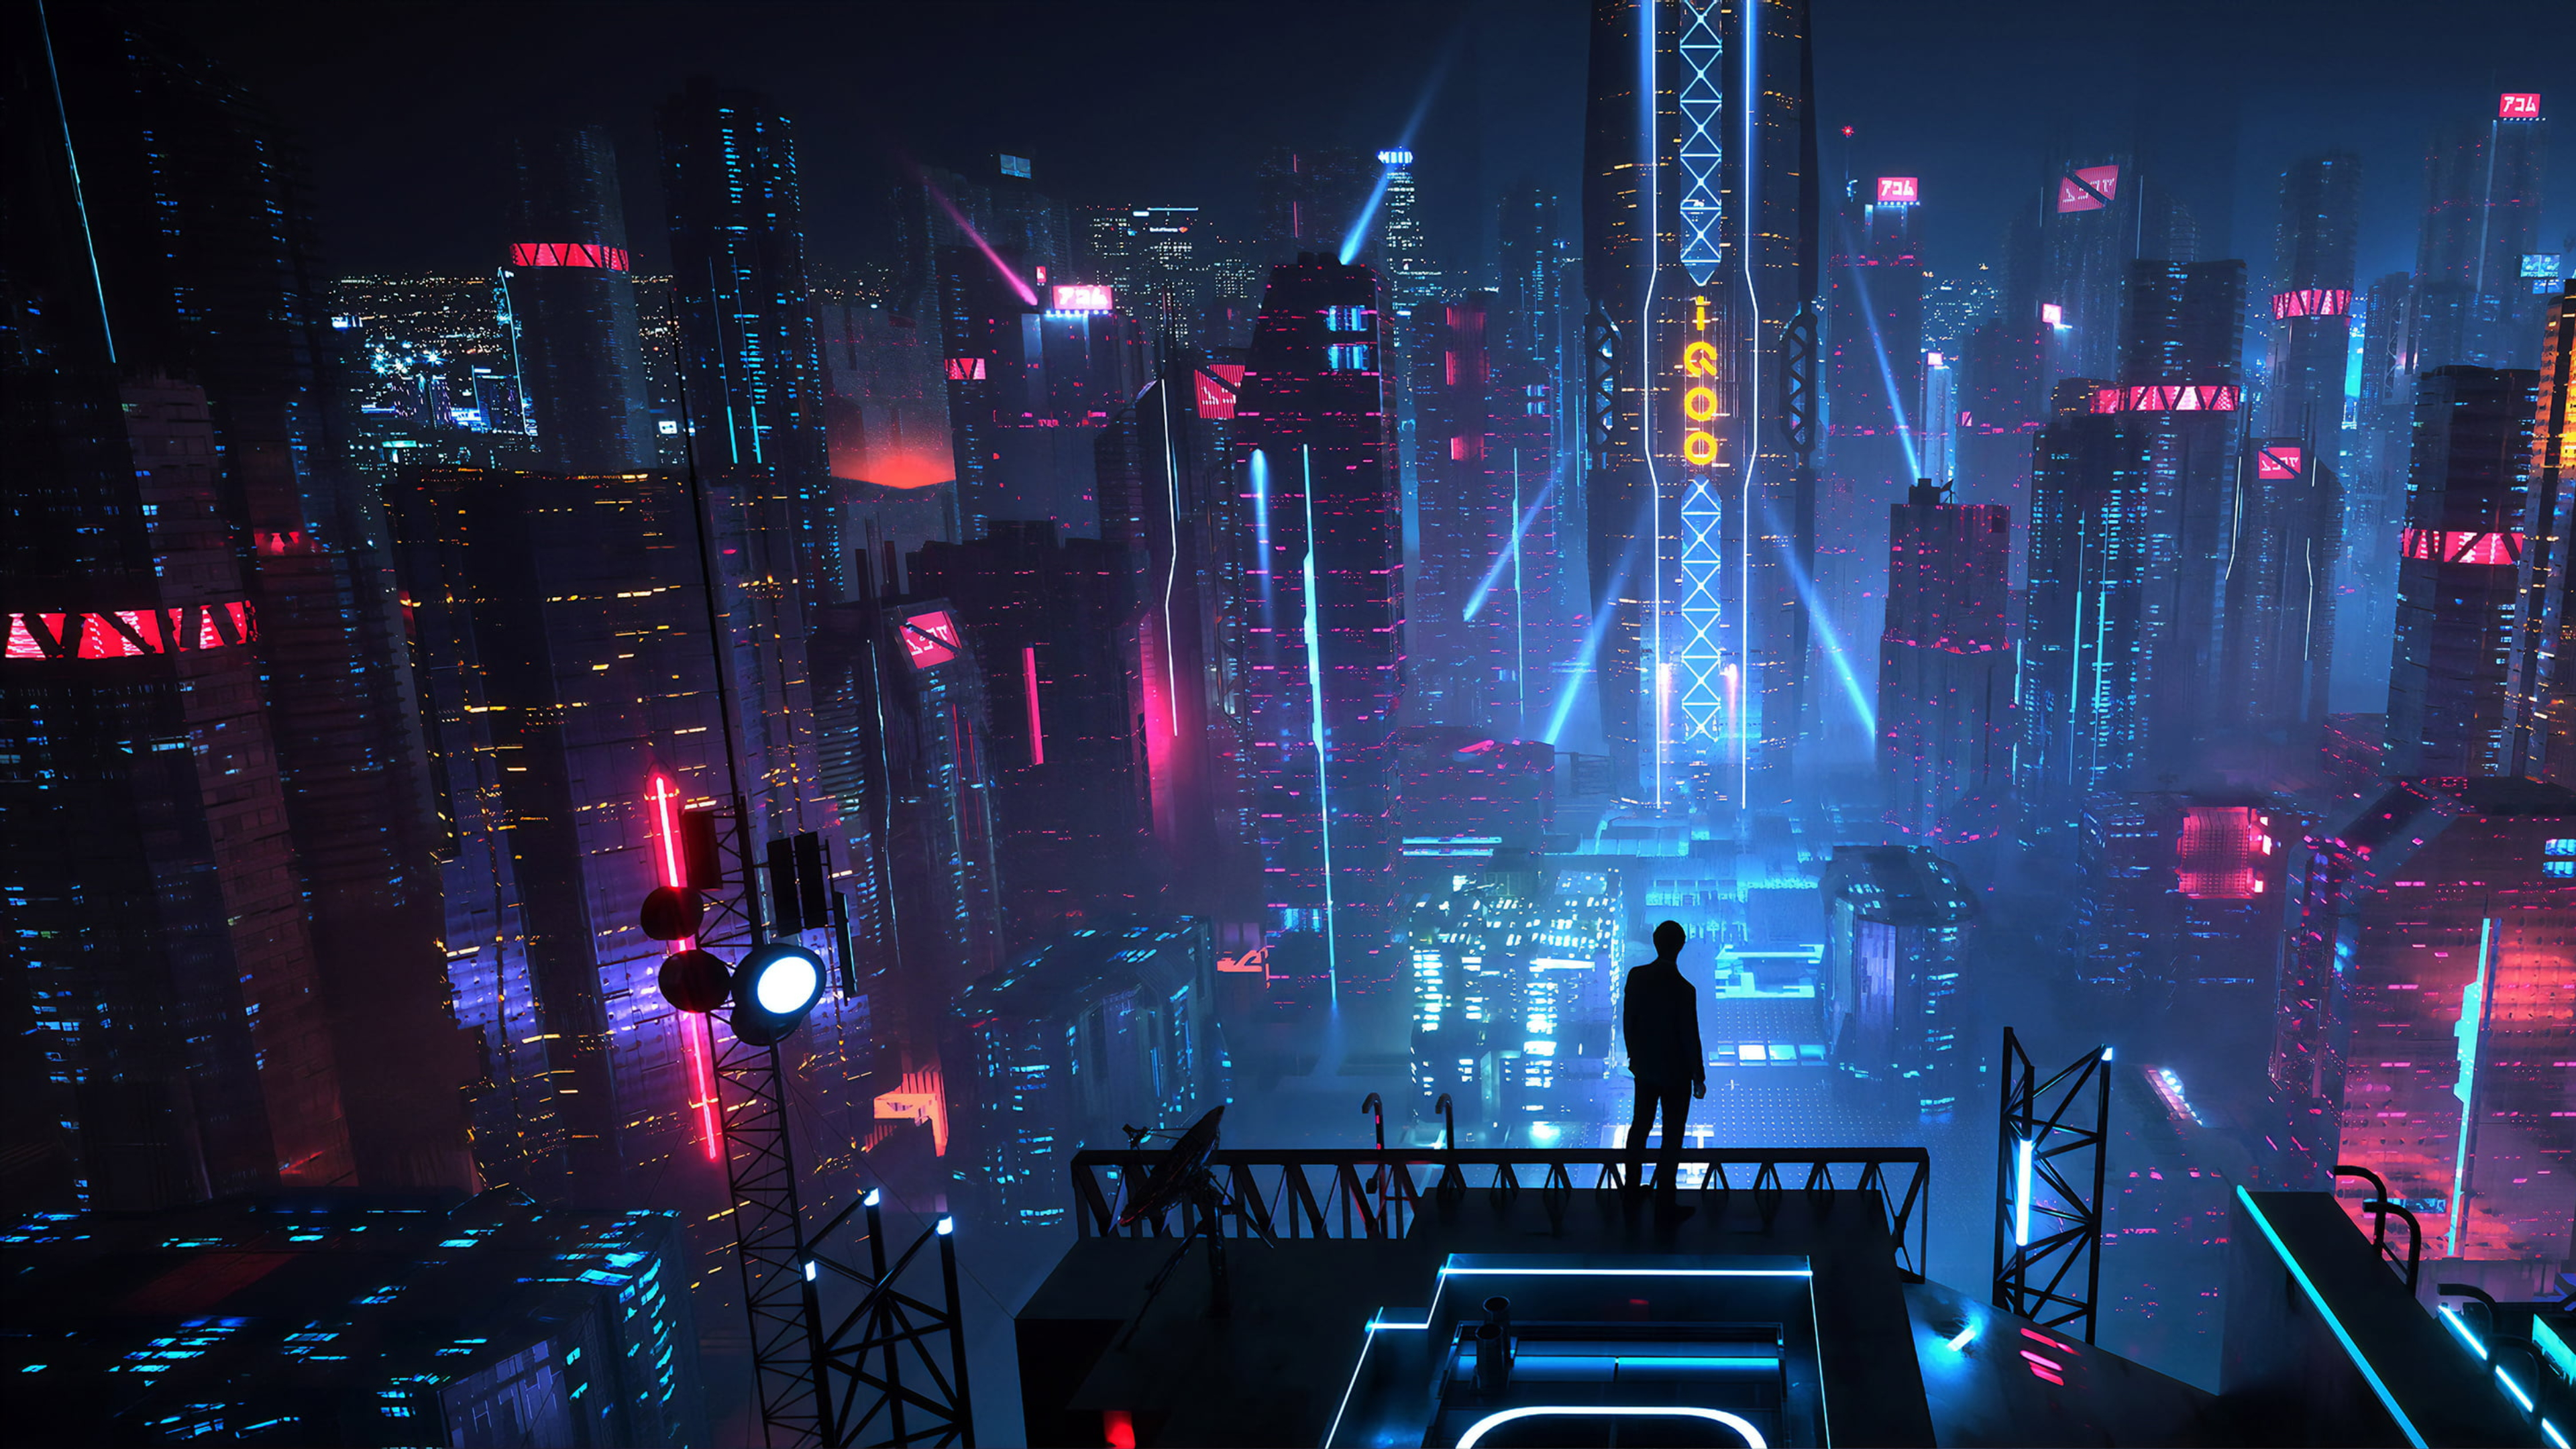 sci fi city night